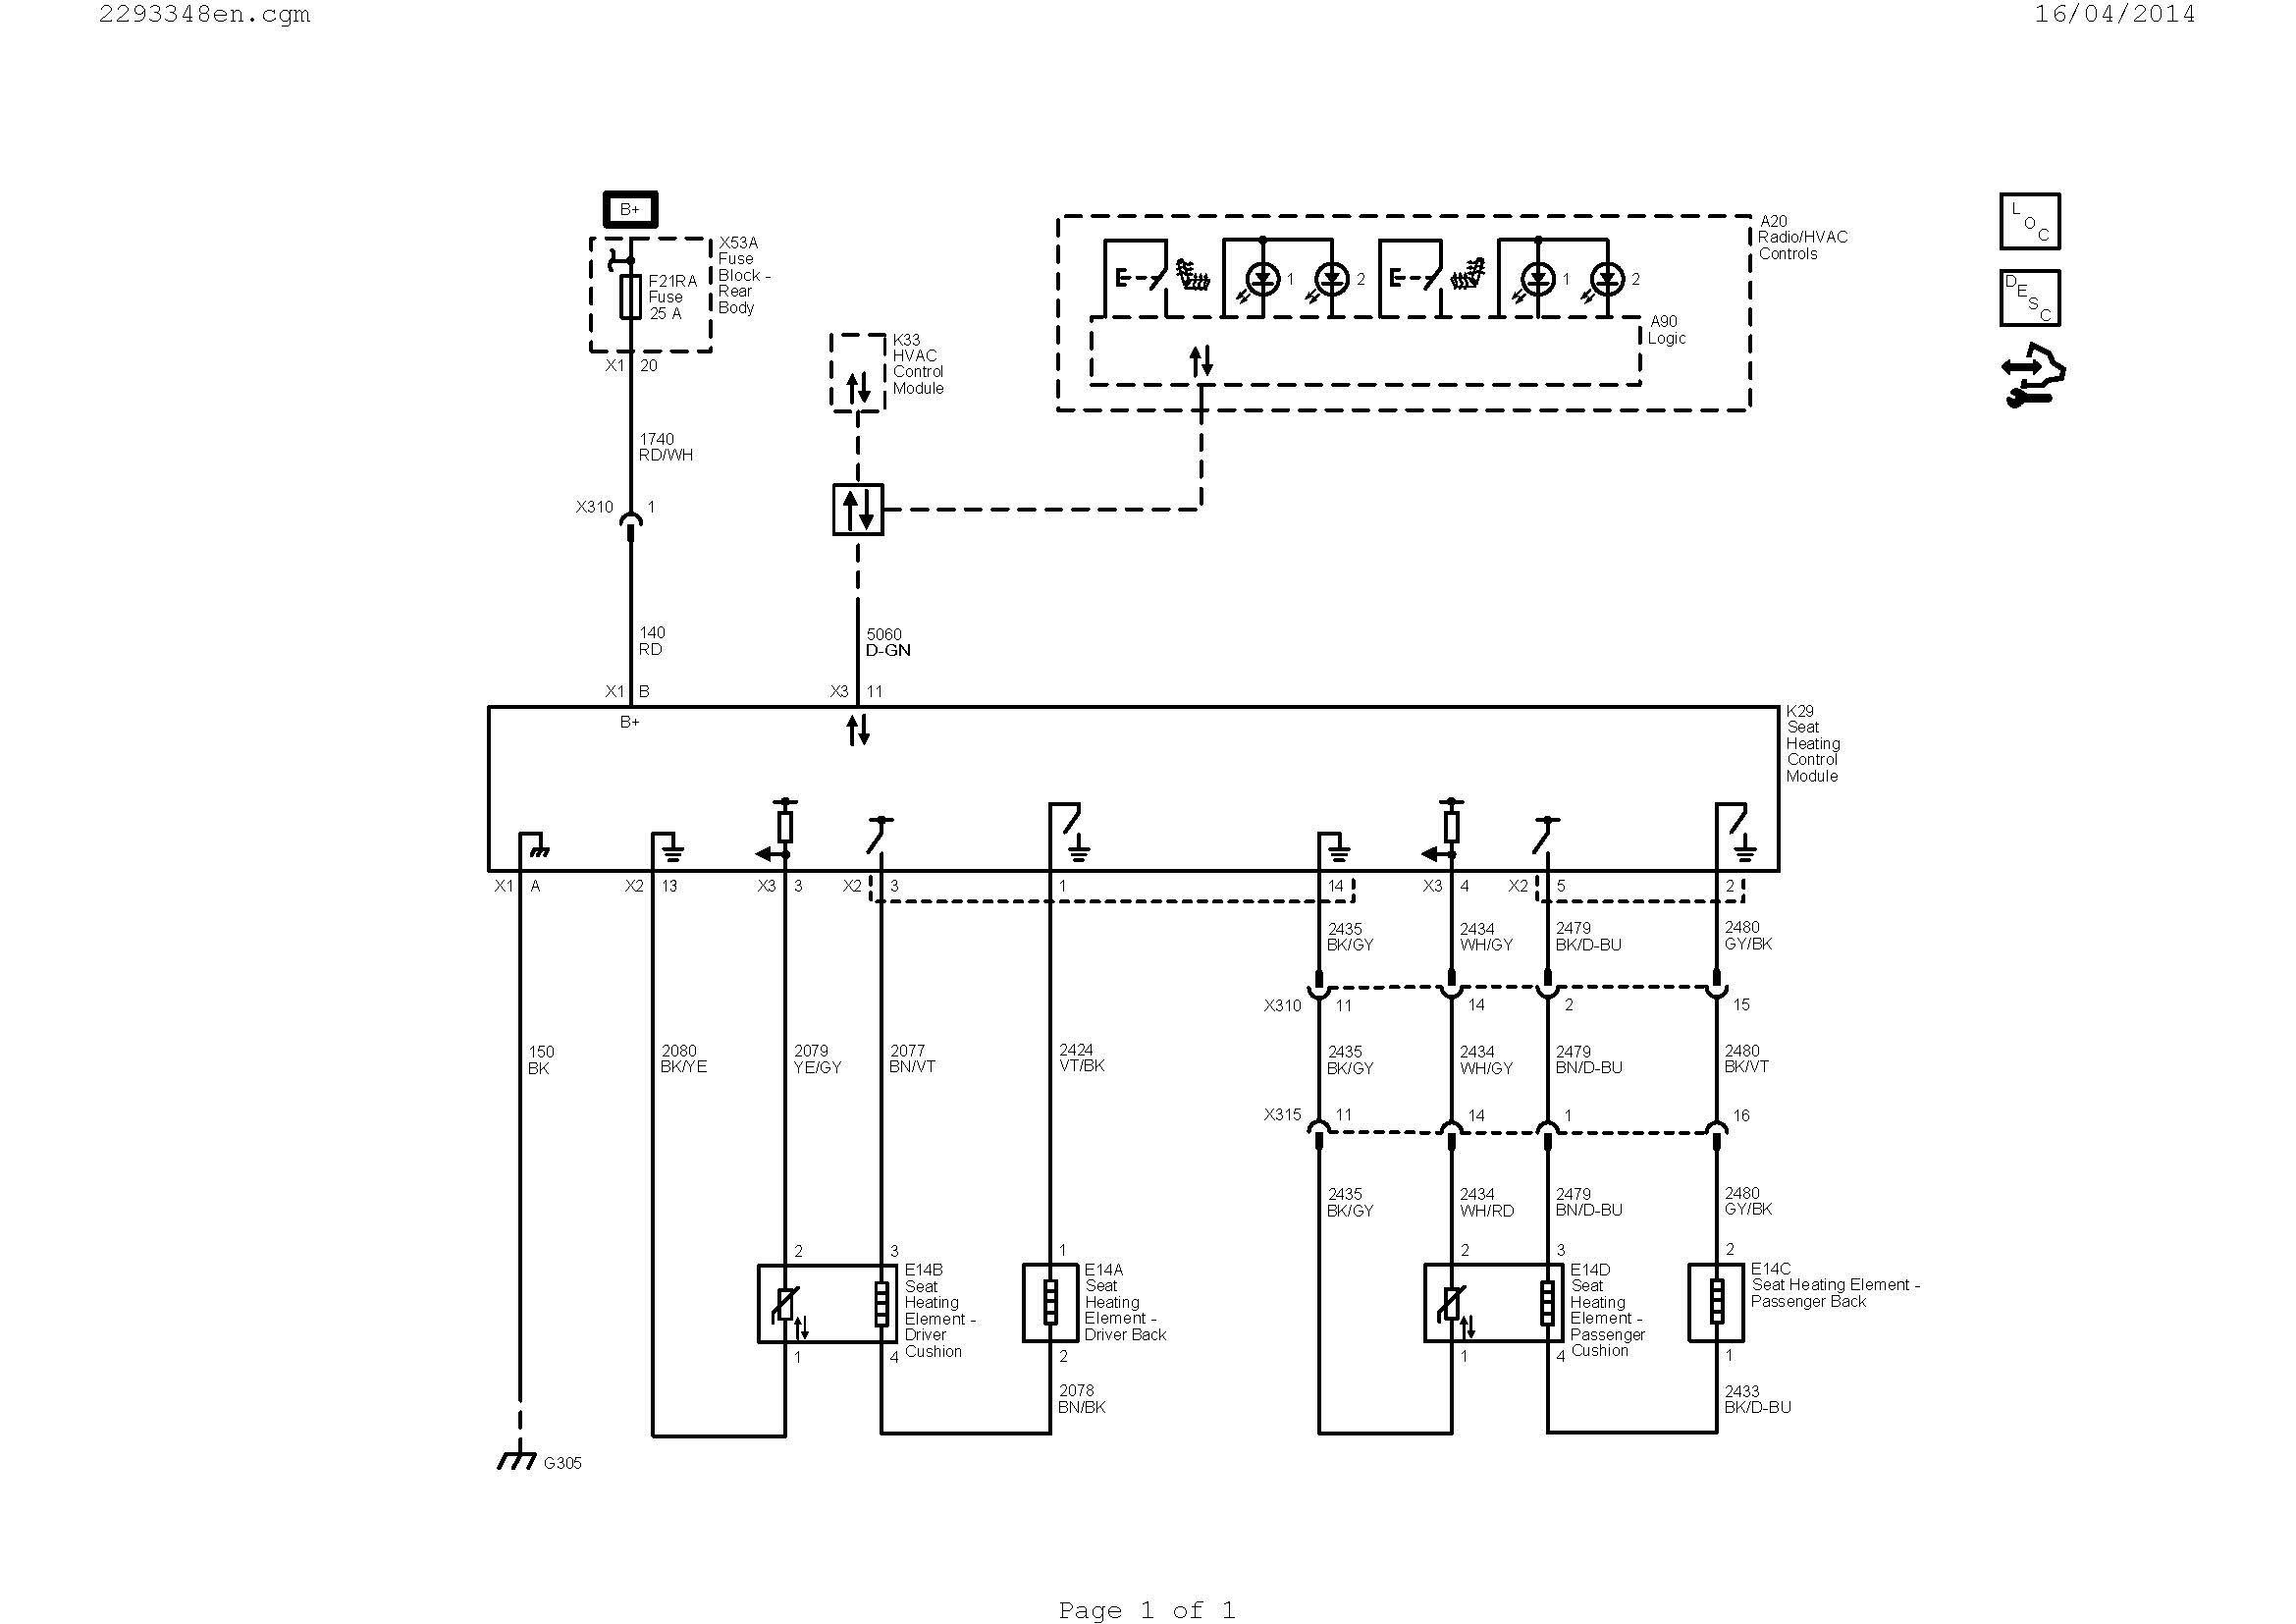 Heater Blower Motor Wiring Diagram Furnace Blower Motor Wiring Diagram Collection Wiring A Ac thermostat